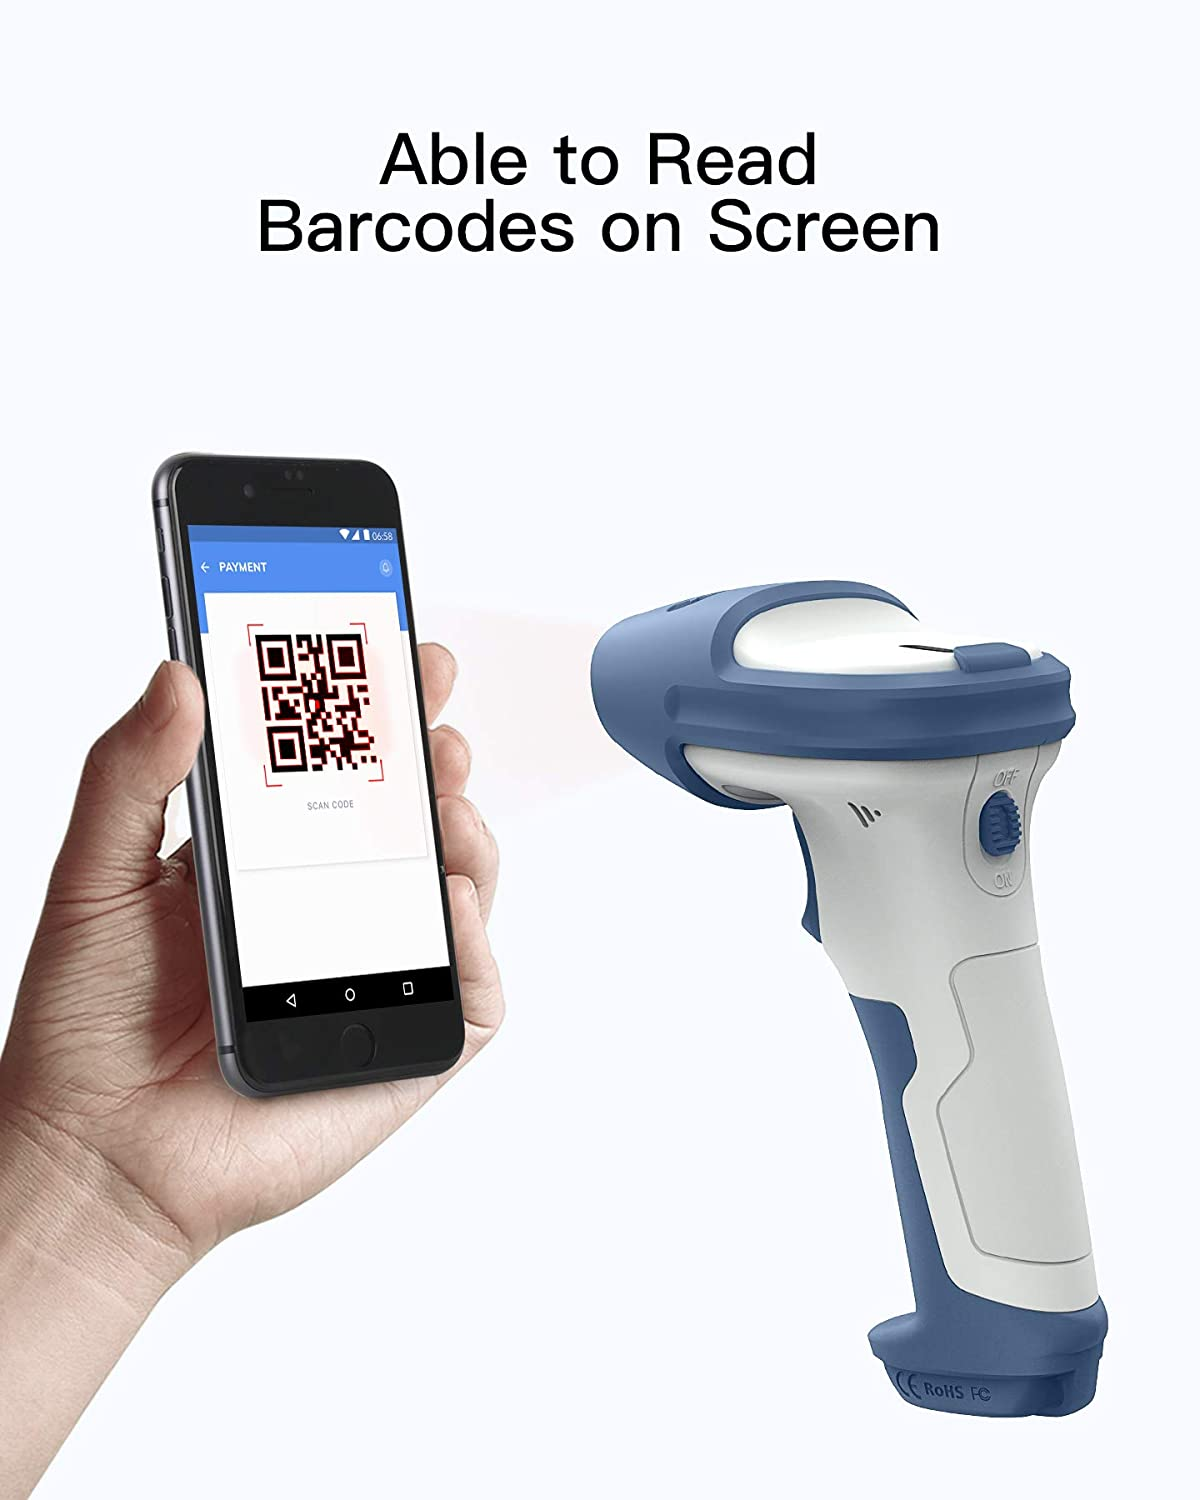 INATECK Wireless Barcode Scanner 2D, Bluetooth 2.4Ghz Scanner 5.0, Barcode Reader Barcode